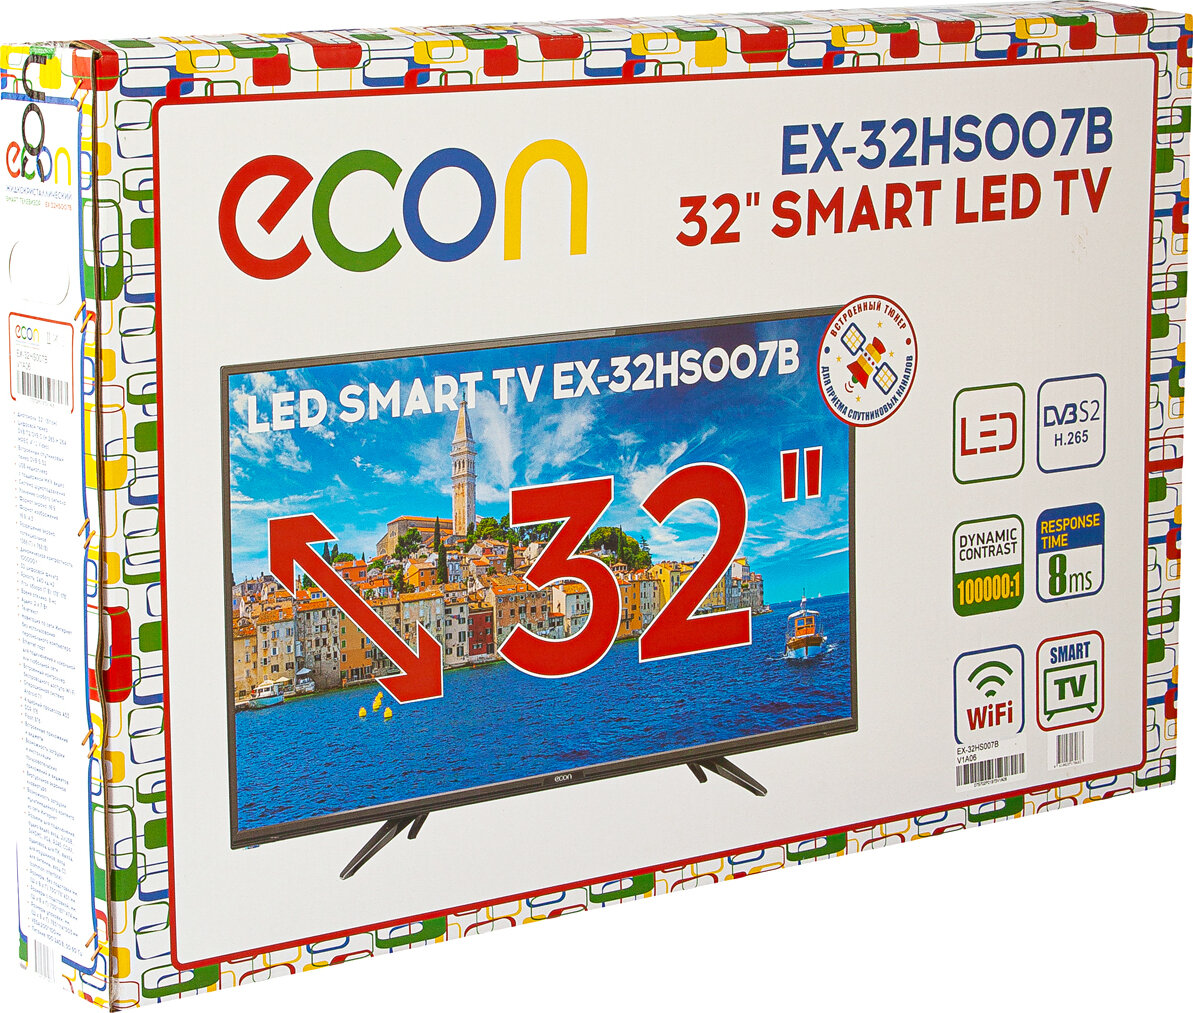 Econ телевизор отзывы. Телевизор ECON 32 hs007b. Телевизор ECON ex-32ht006b. ECON телевизор ex43fs005b. Телевизор ECON ex-24ht005b 24" (2019).